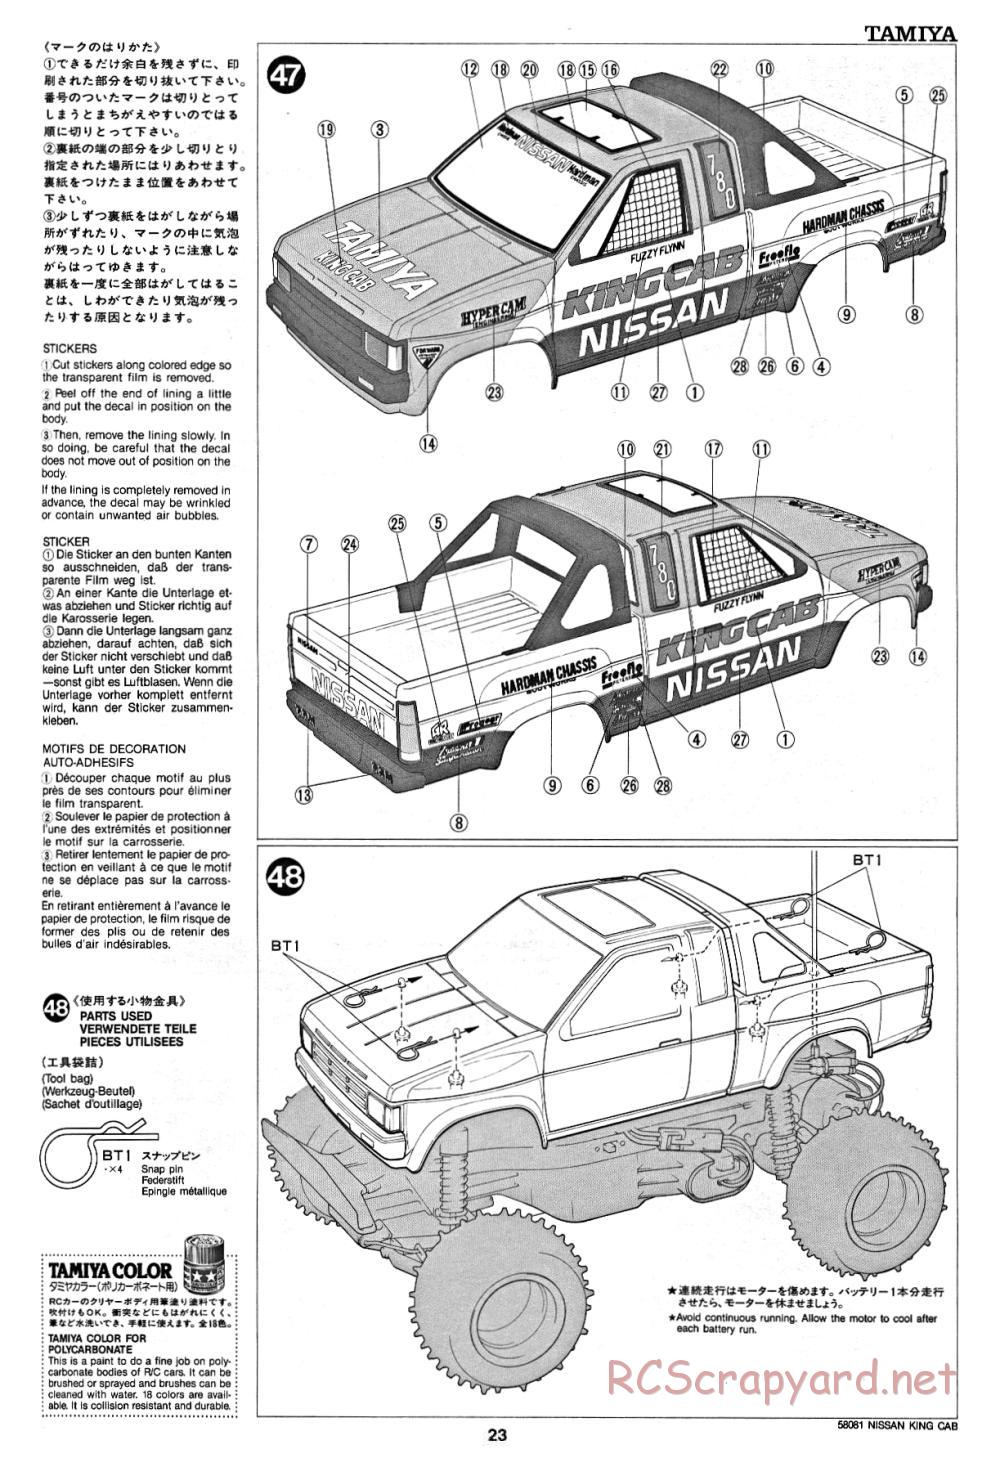 Tamiya - Nissan King Cab - 58081 - Manual - Page 23